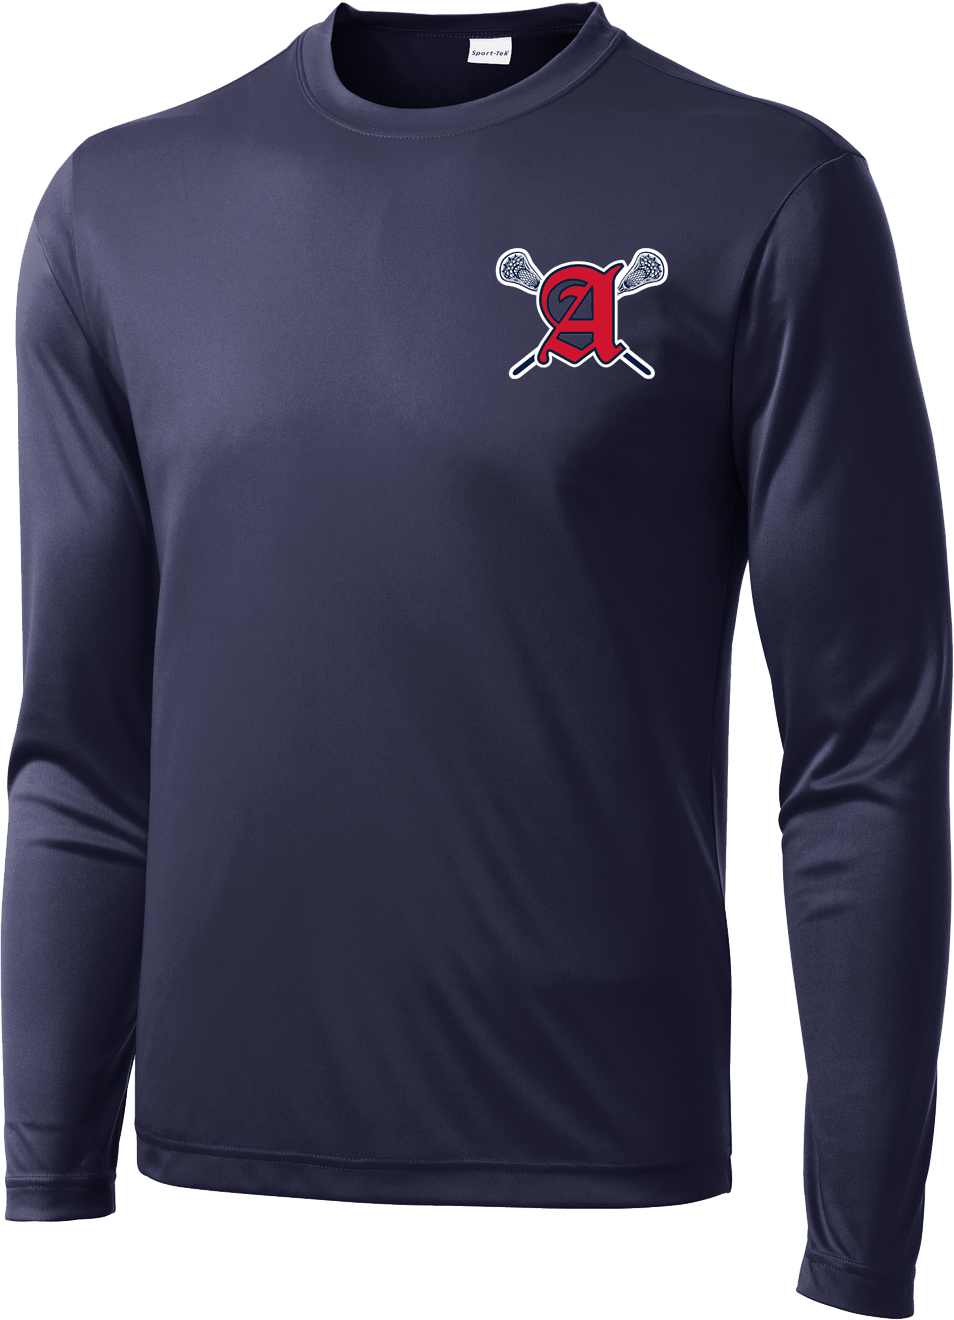 Augusta Patriots Navy Long Sleeve Performance Shirt